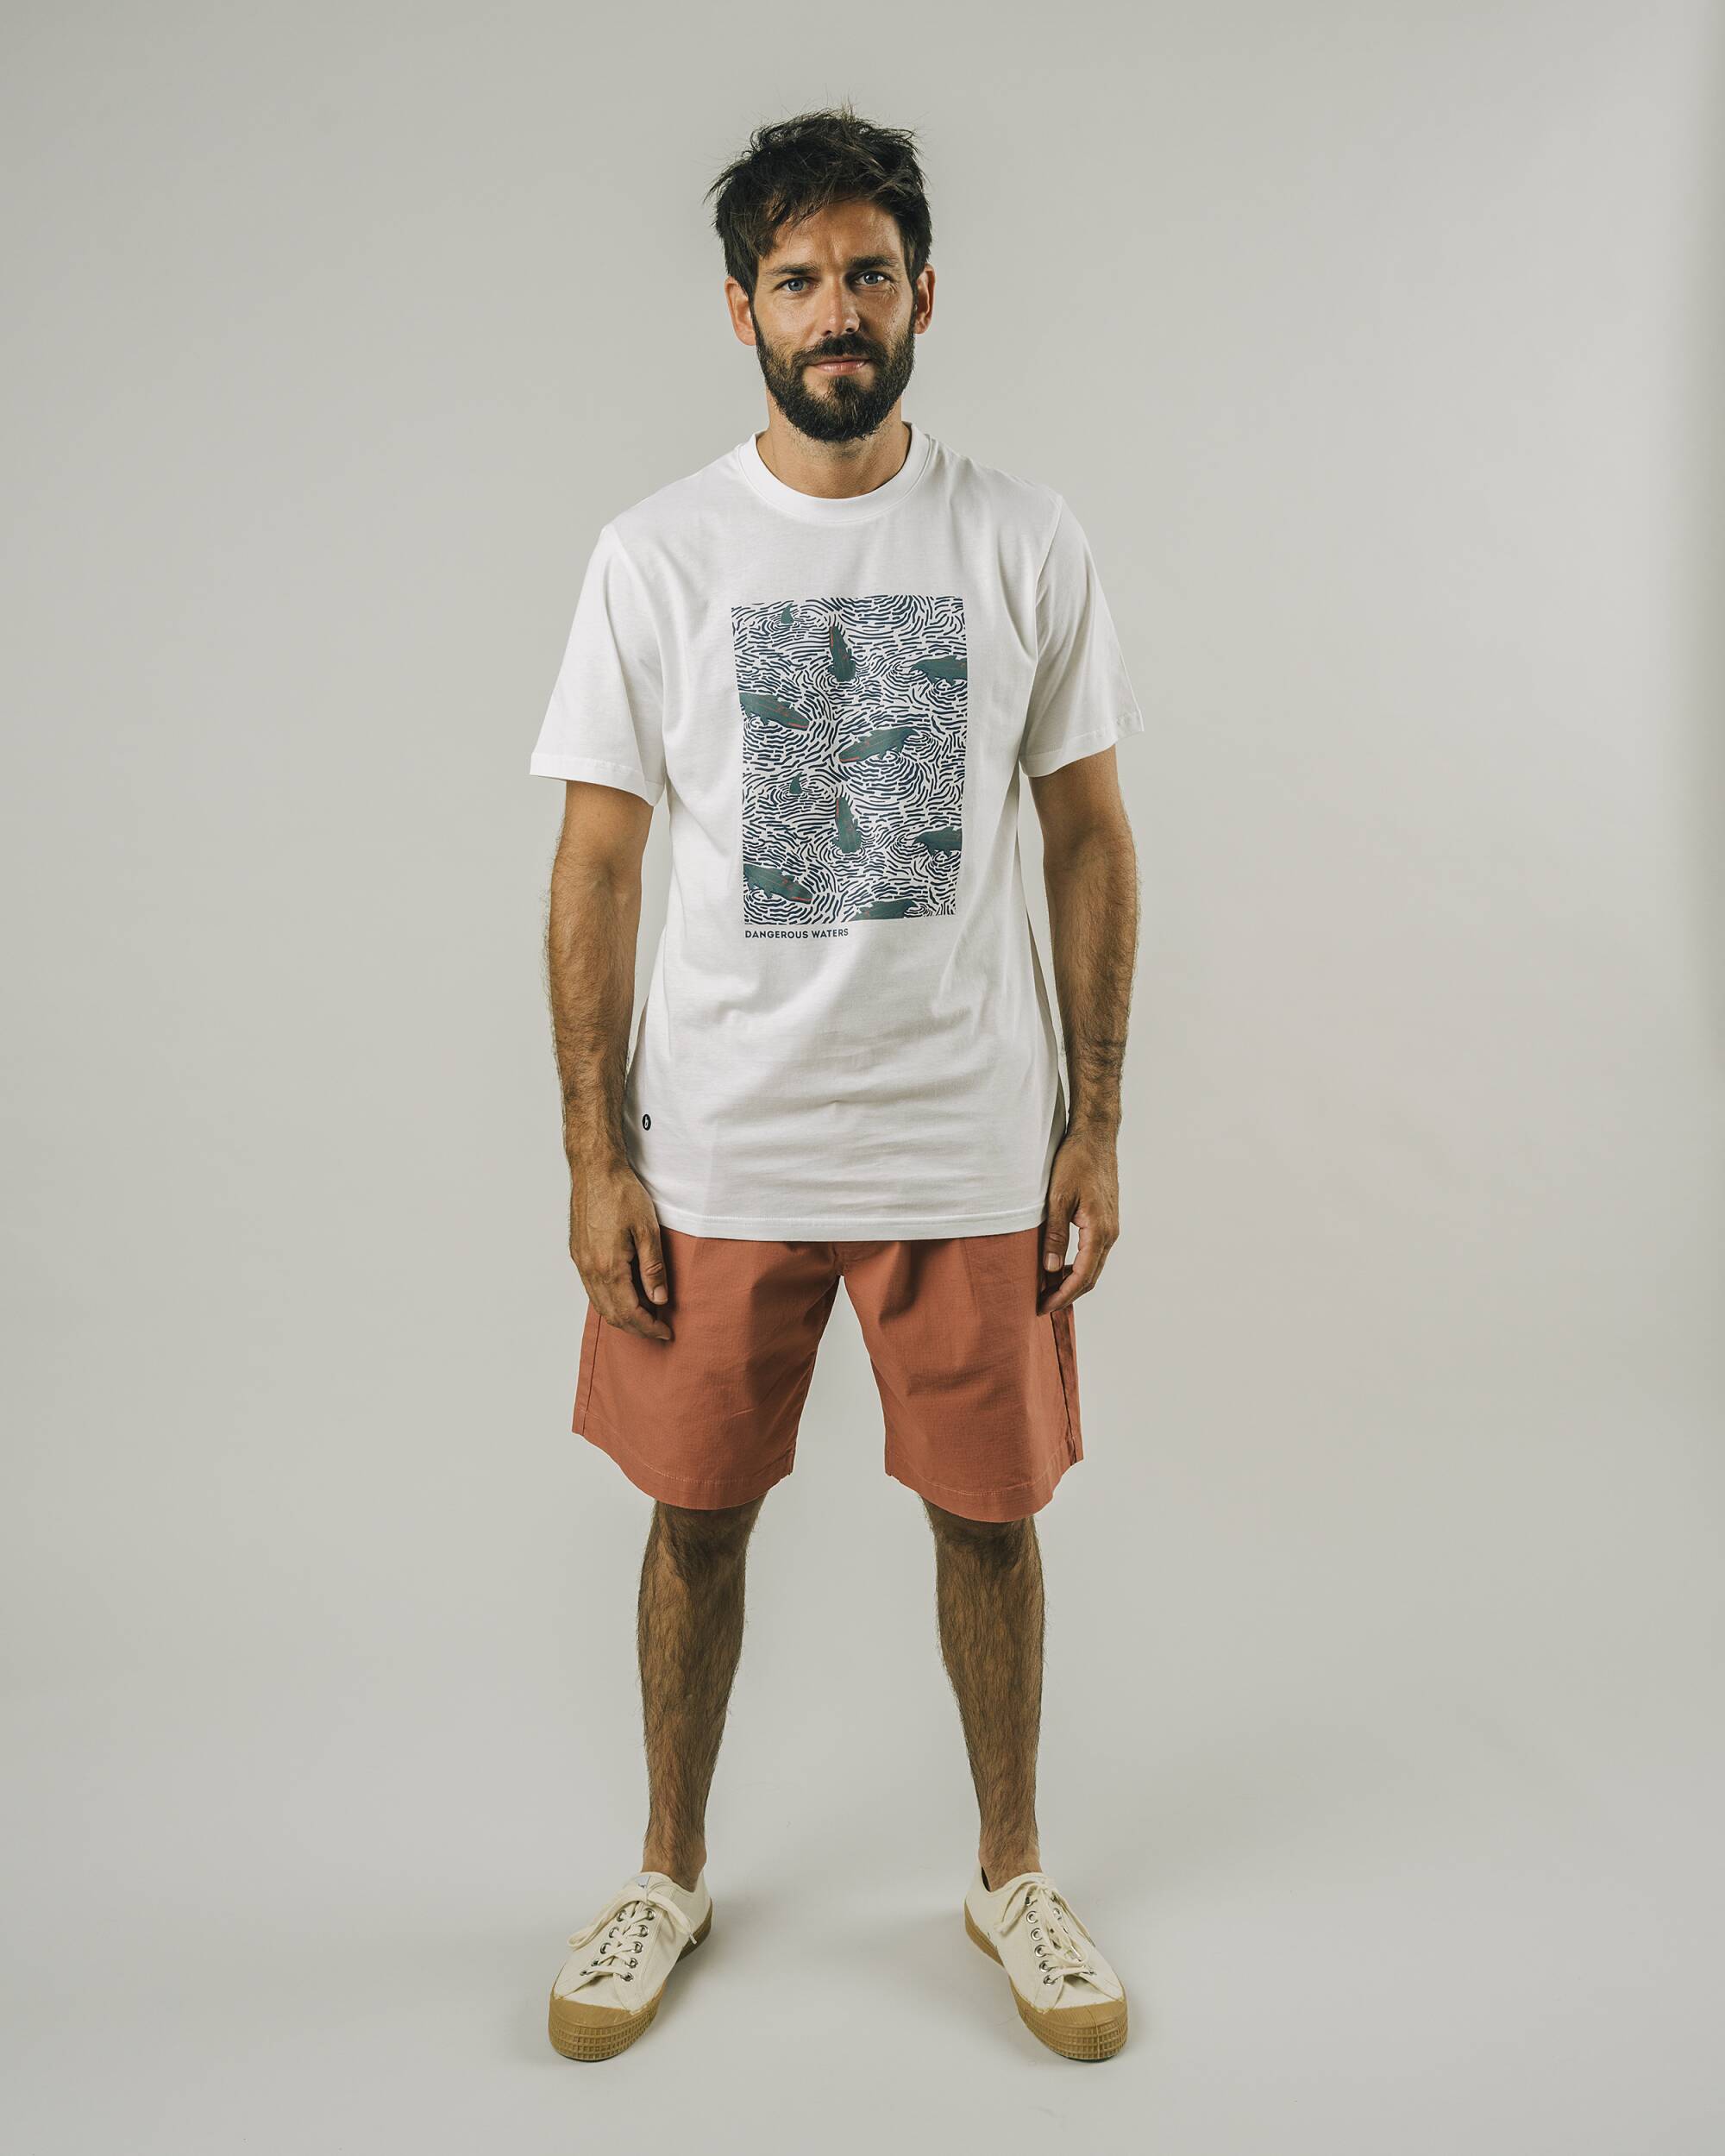 White, printed Crocodile T-shirt made from 100% organic cotton from Brava Fabrics